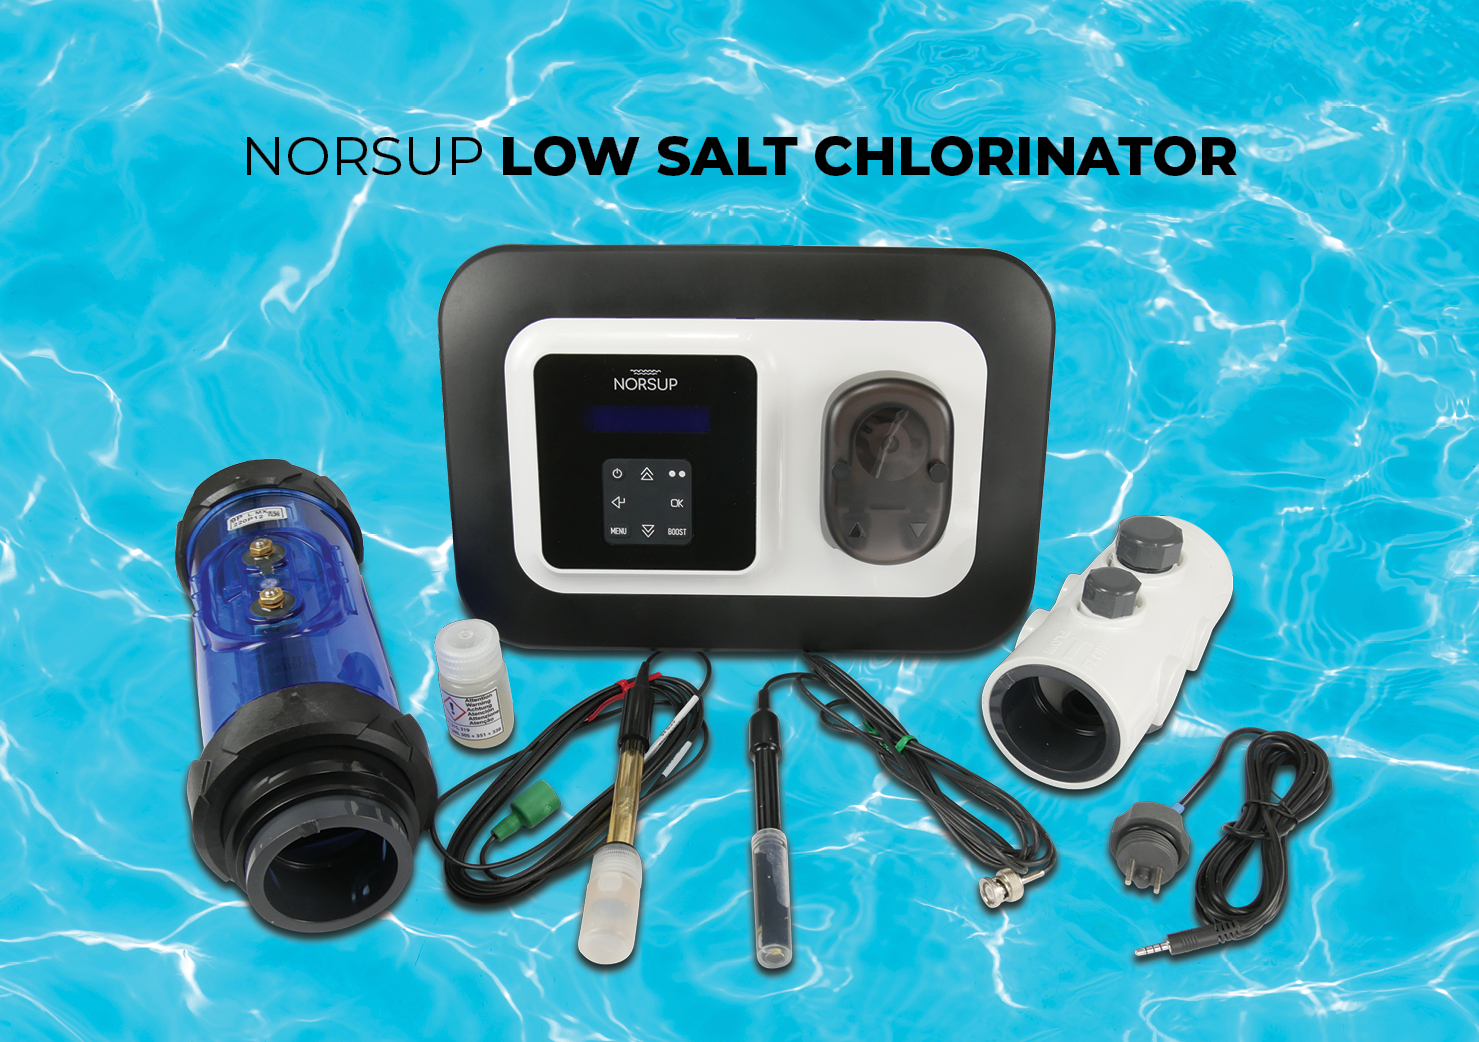 Norsup low salt chlorinator